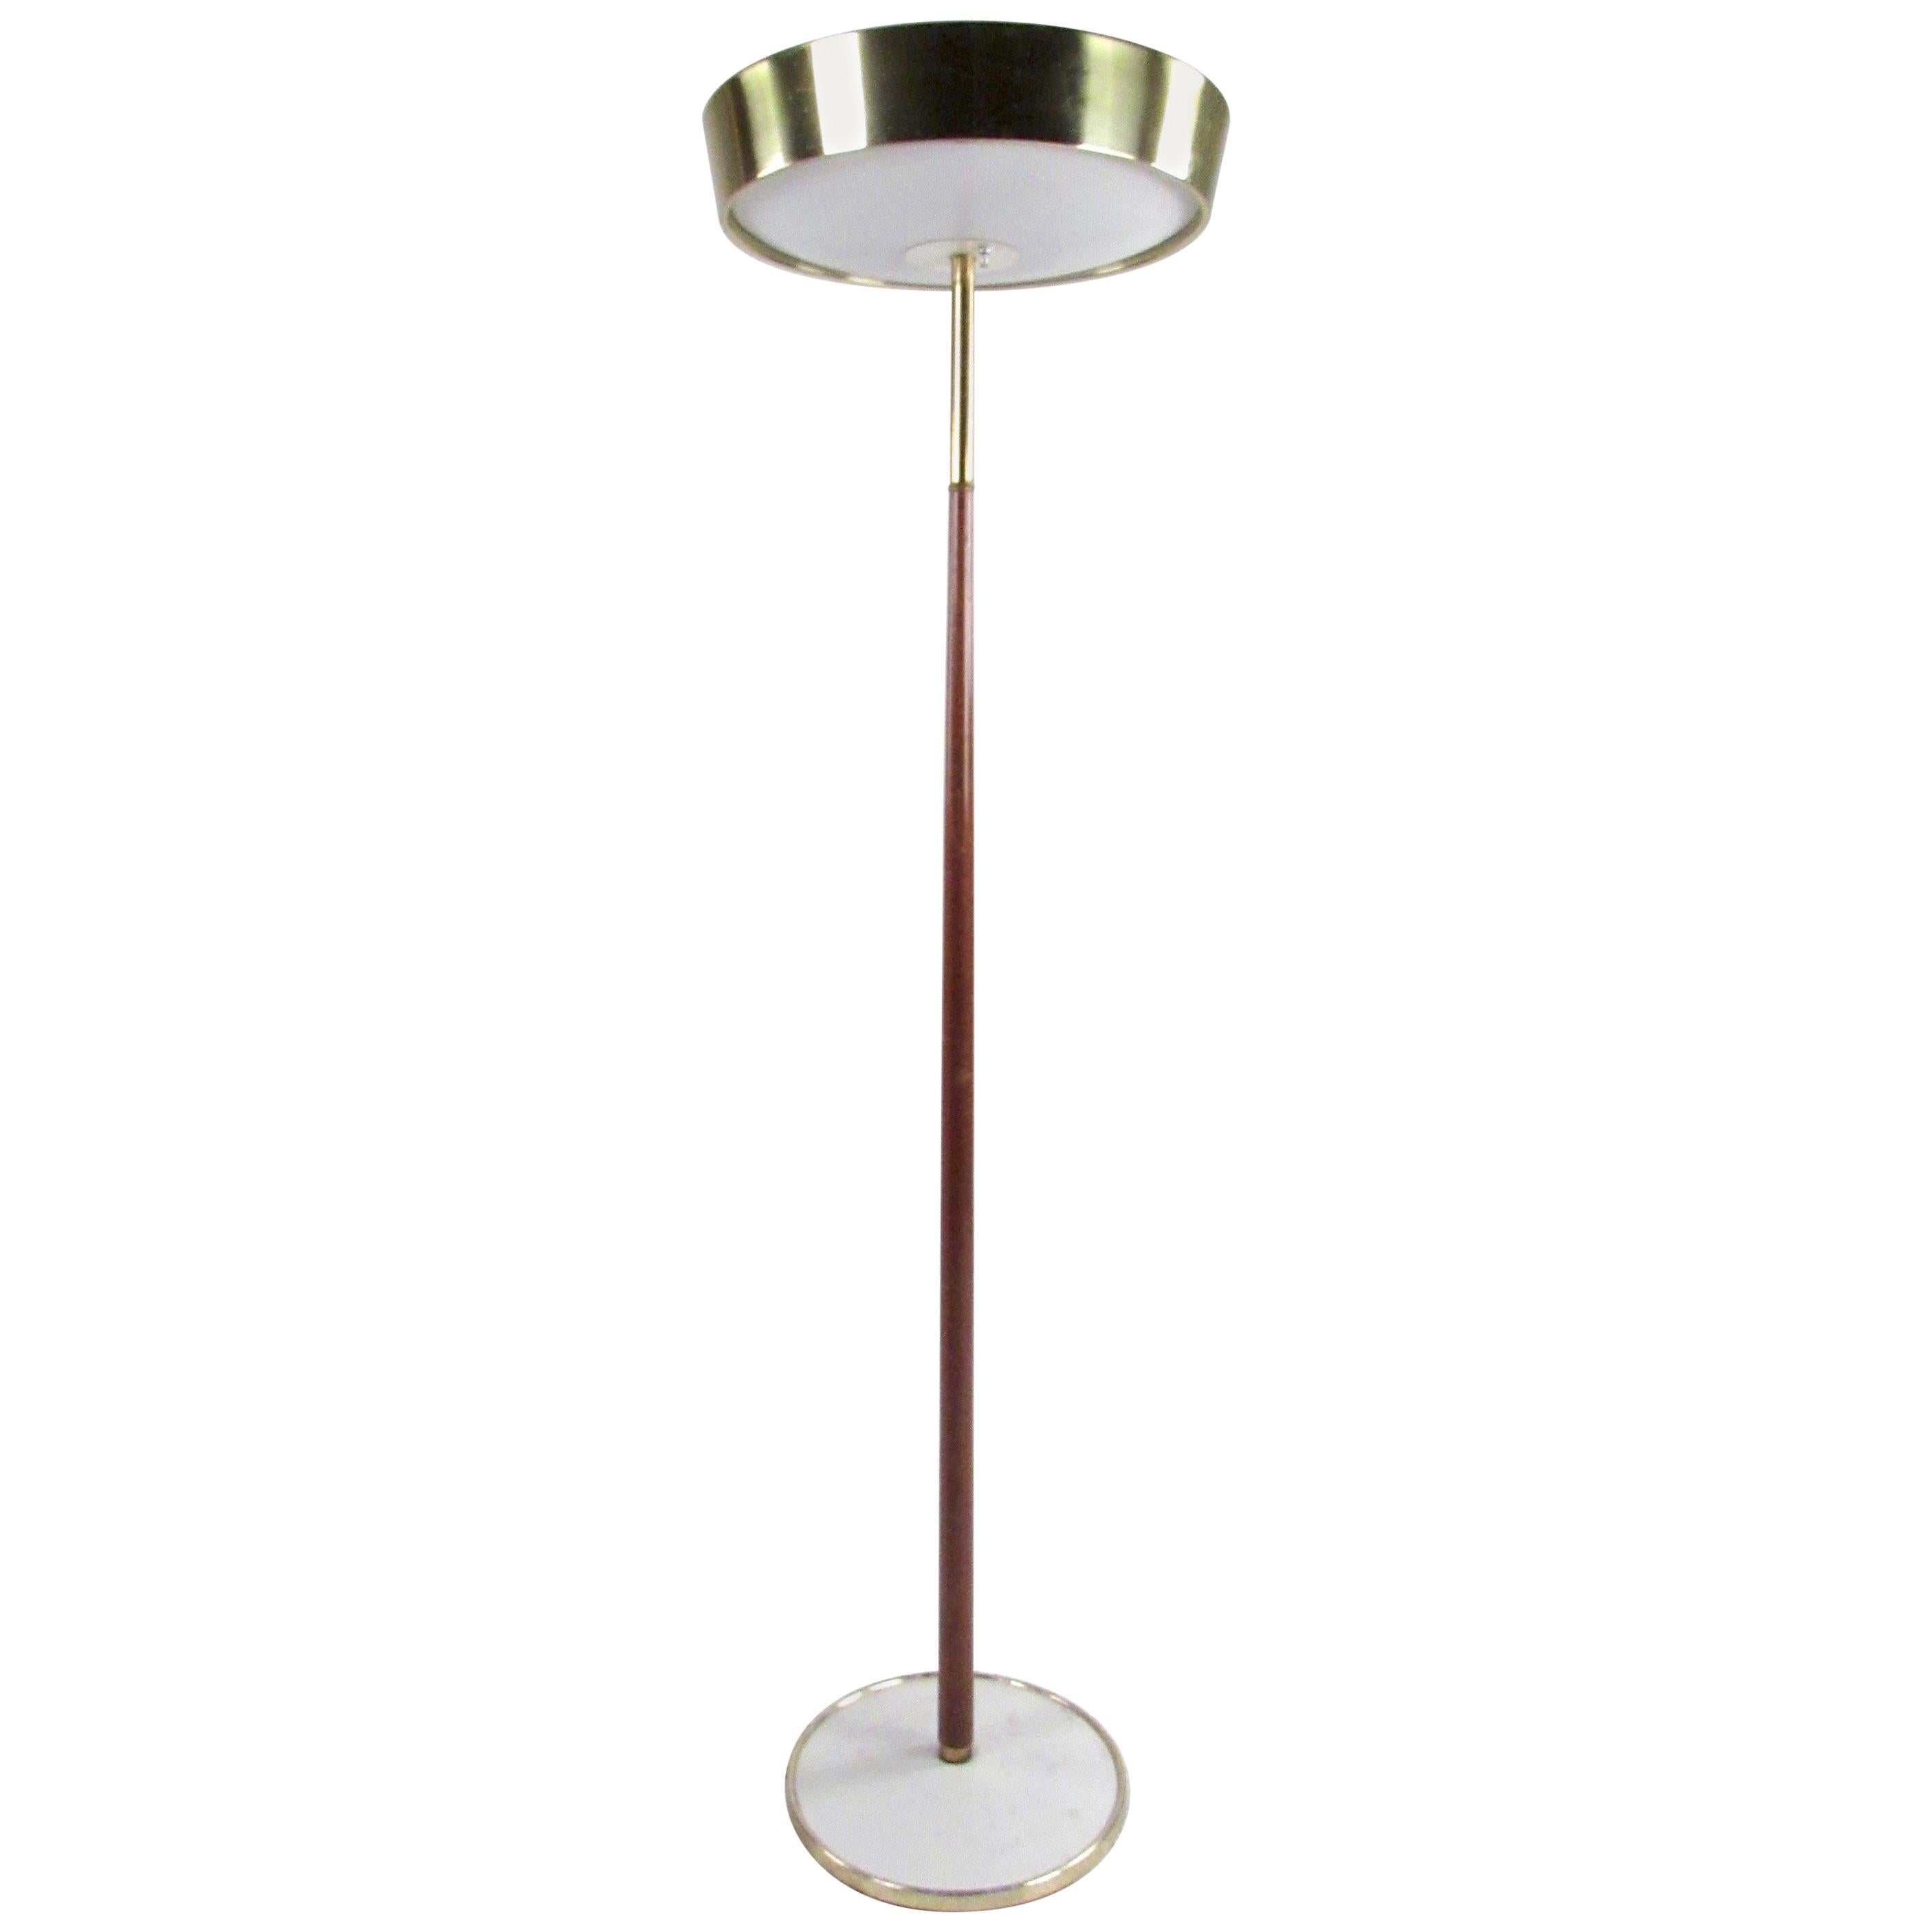 Midcentury Floor Lamp with Brass and Walnut Trim